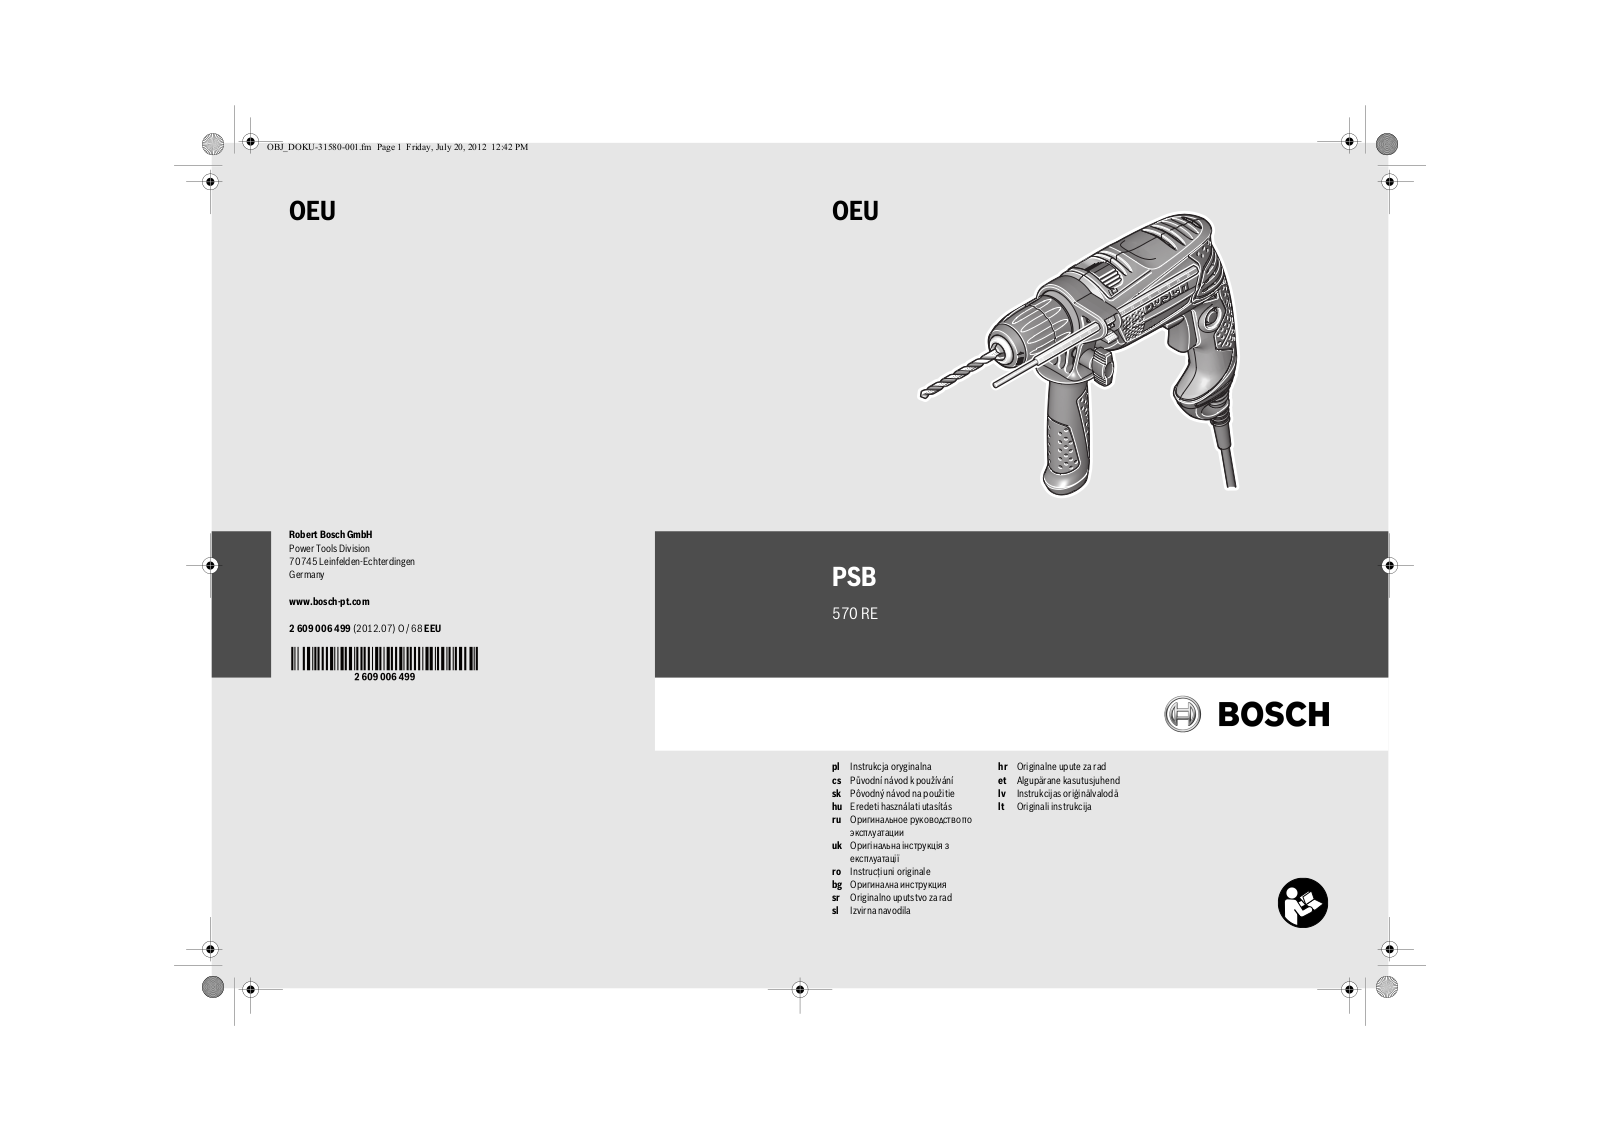 BOSCH PSB 570 RE User Manual